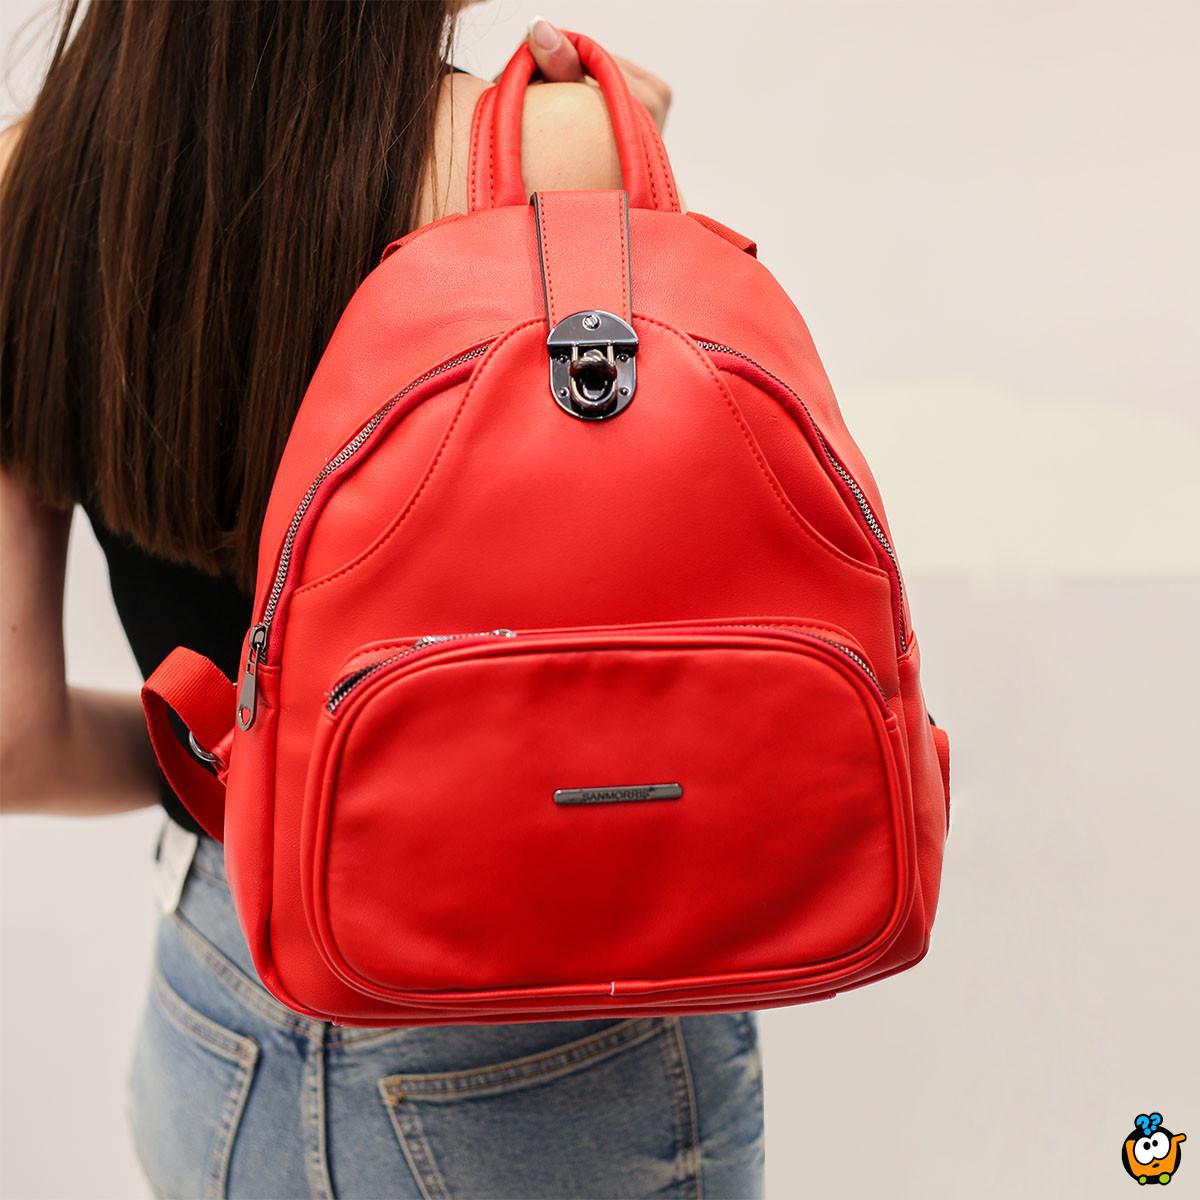 Backpack Red - kompaktni modni ranac u crvenoj  boji 1381 RED